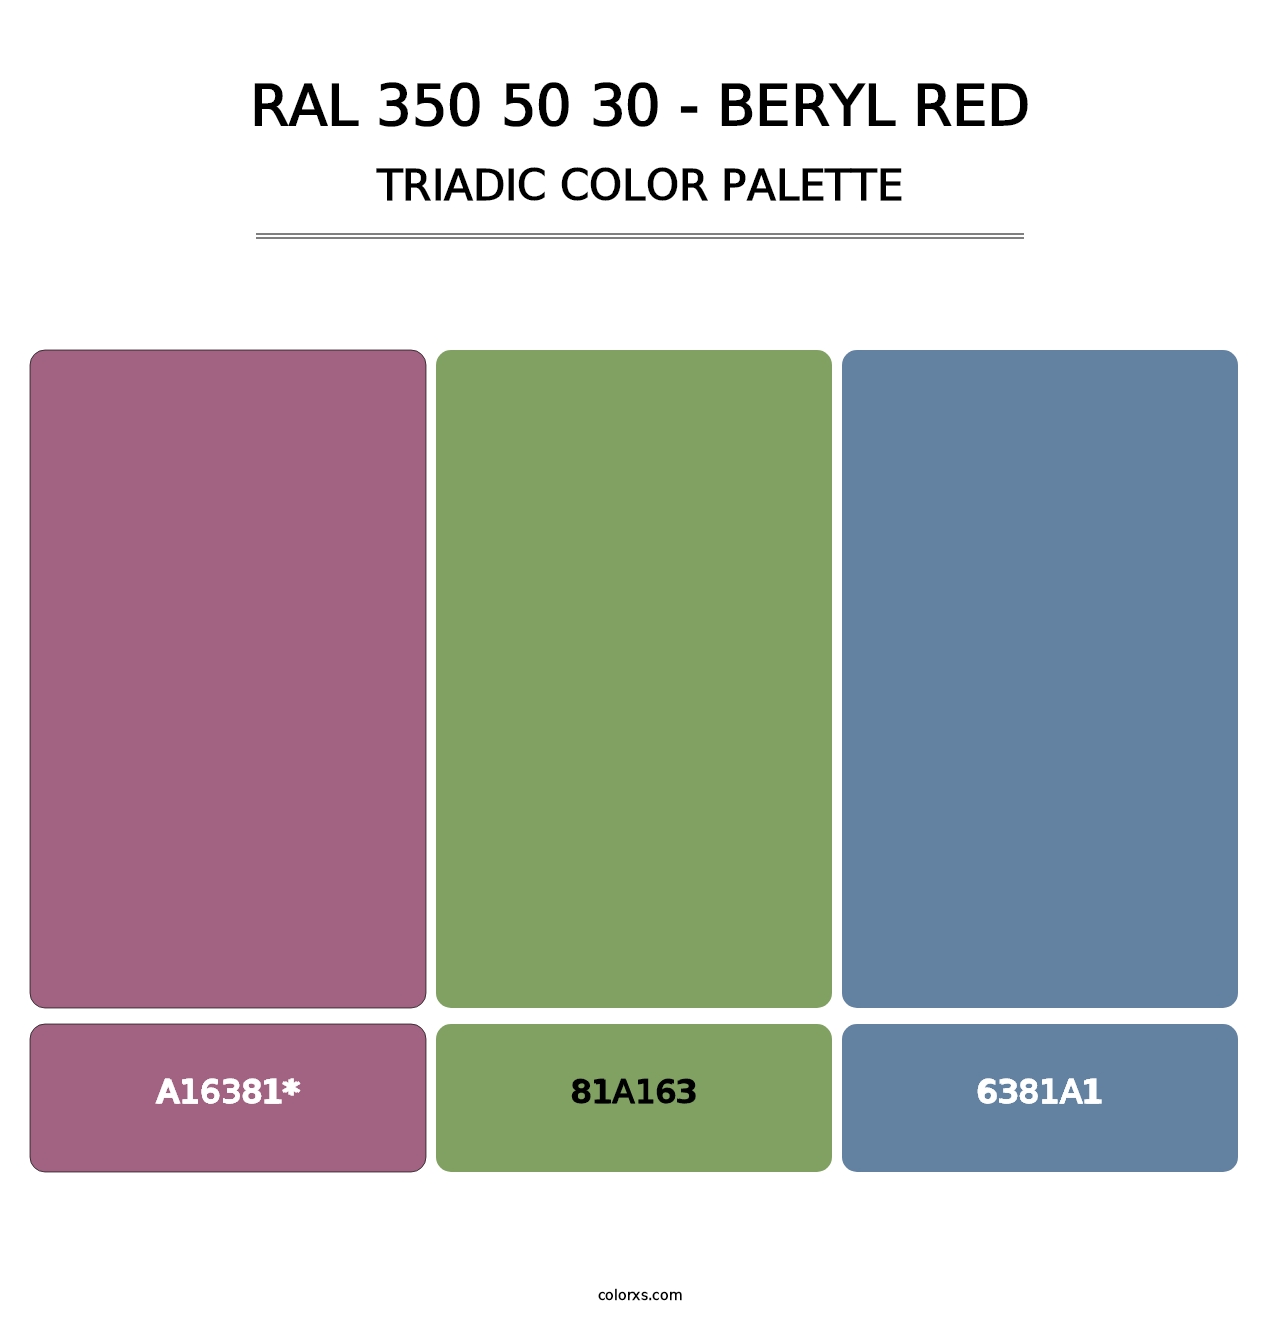 RAL 350 50 30 - Beryl Red - Triadic Color Palette